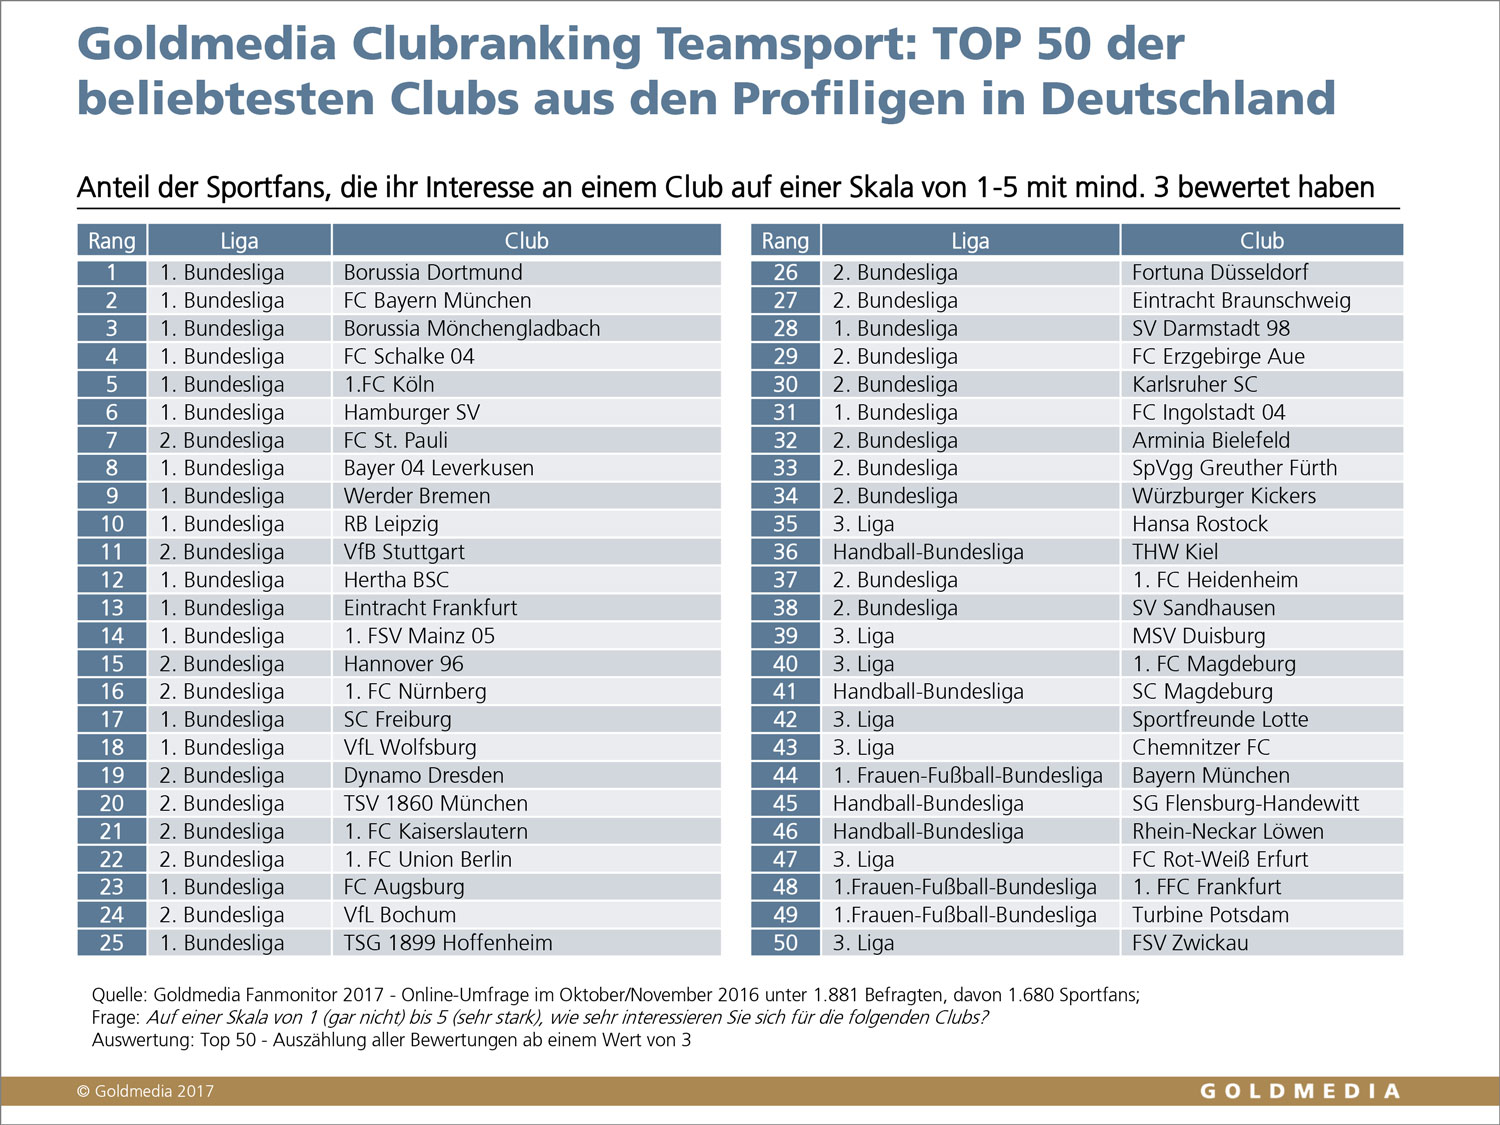 Goldmedia Fanmonitor 2017: Clubranking Teamsport TOP 50, © Goldmedia 2017